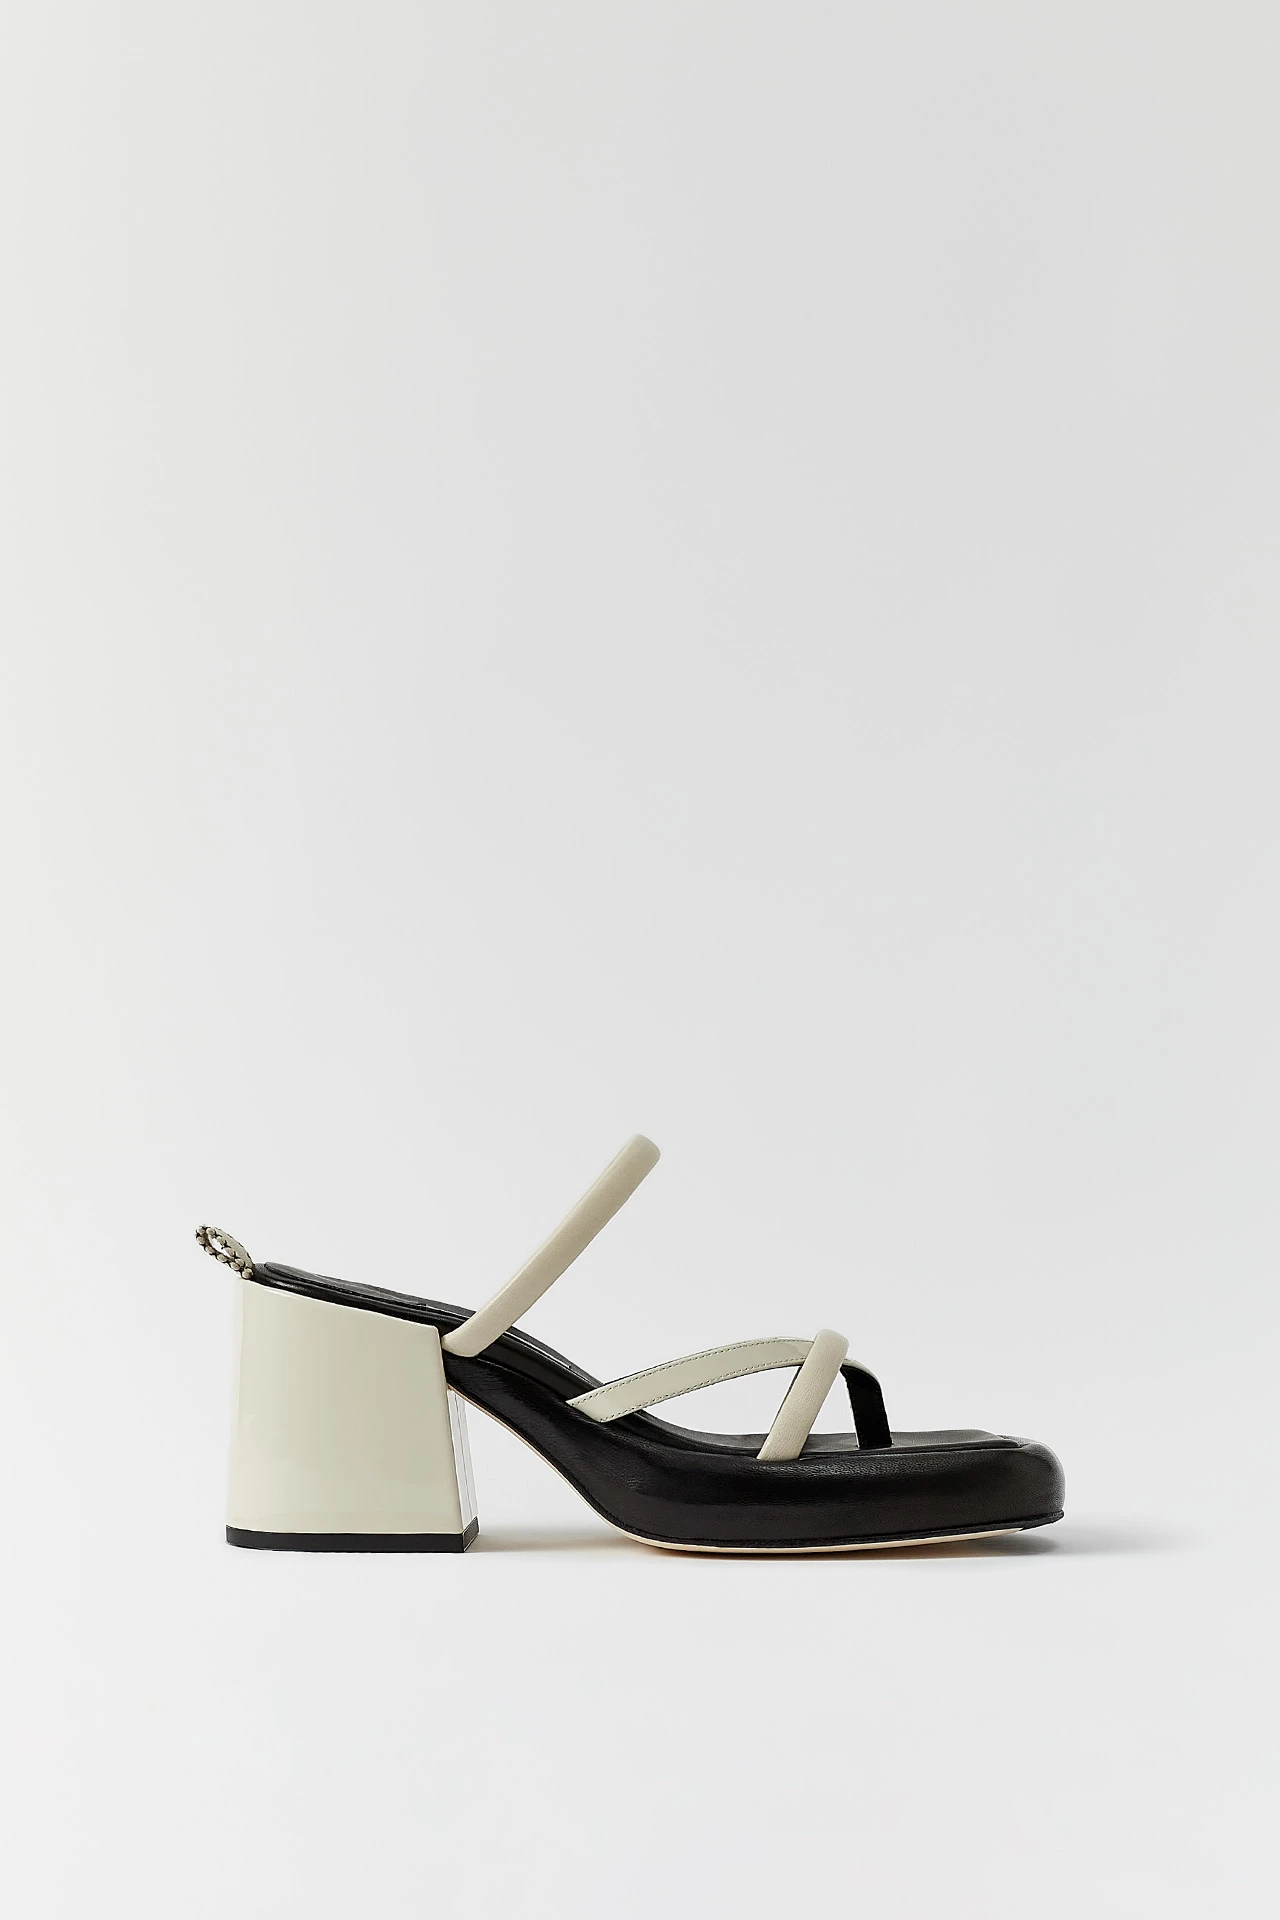 Delphine White Sandals | Miista Europe | Made in Spain